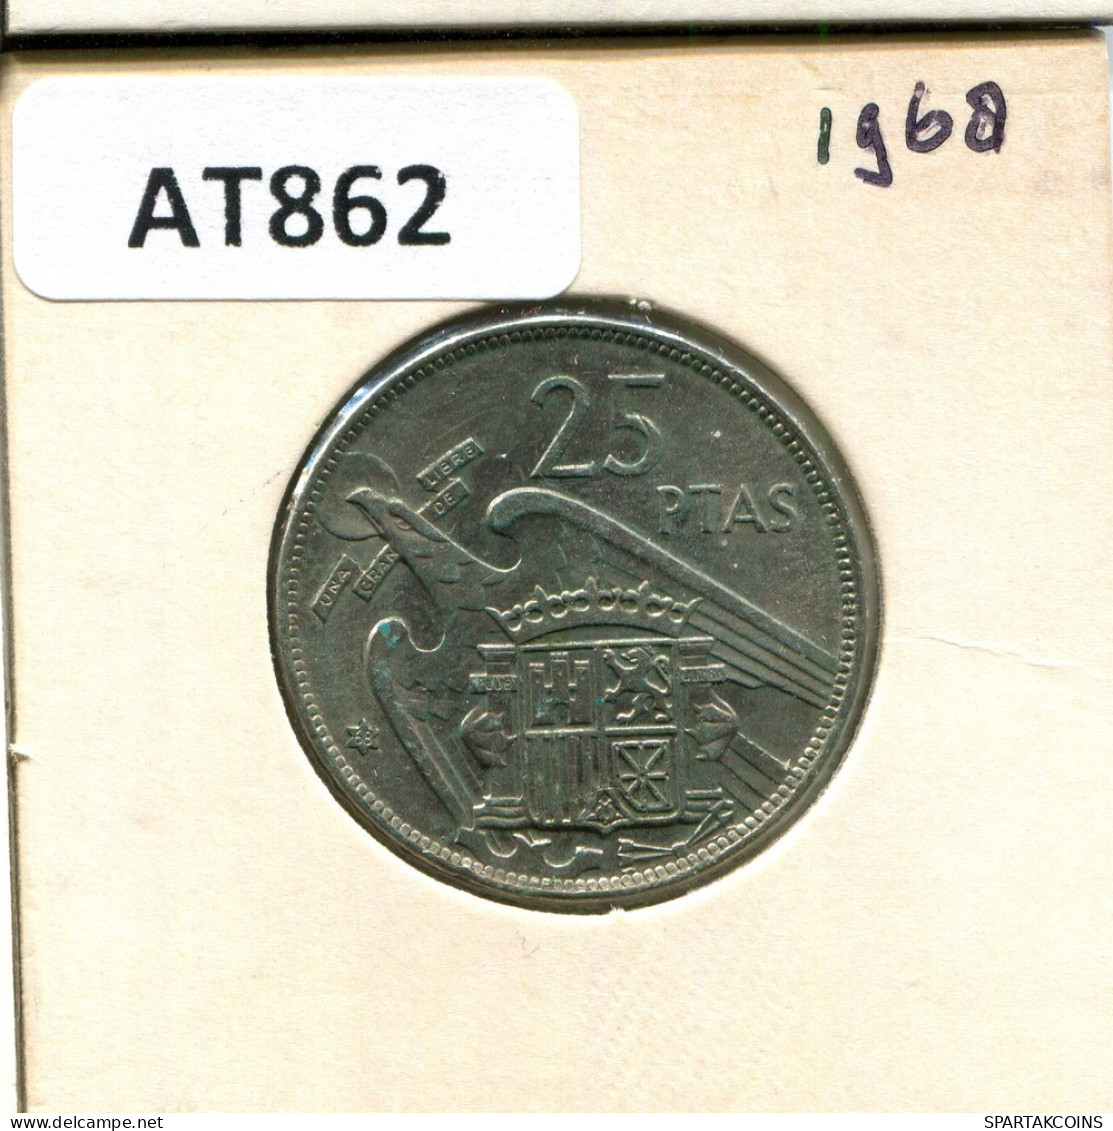 25 PESETAS 1968 SPAIN Coin #AT862.U.A - 25 Peseta